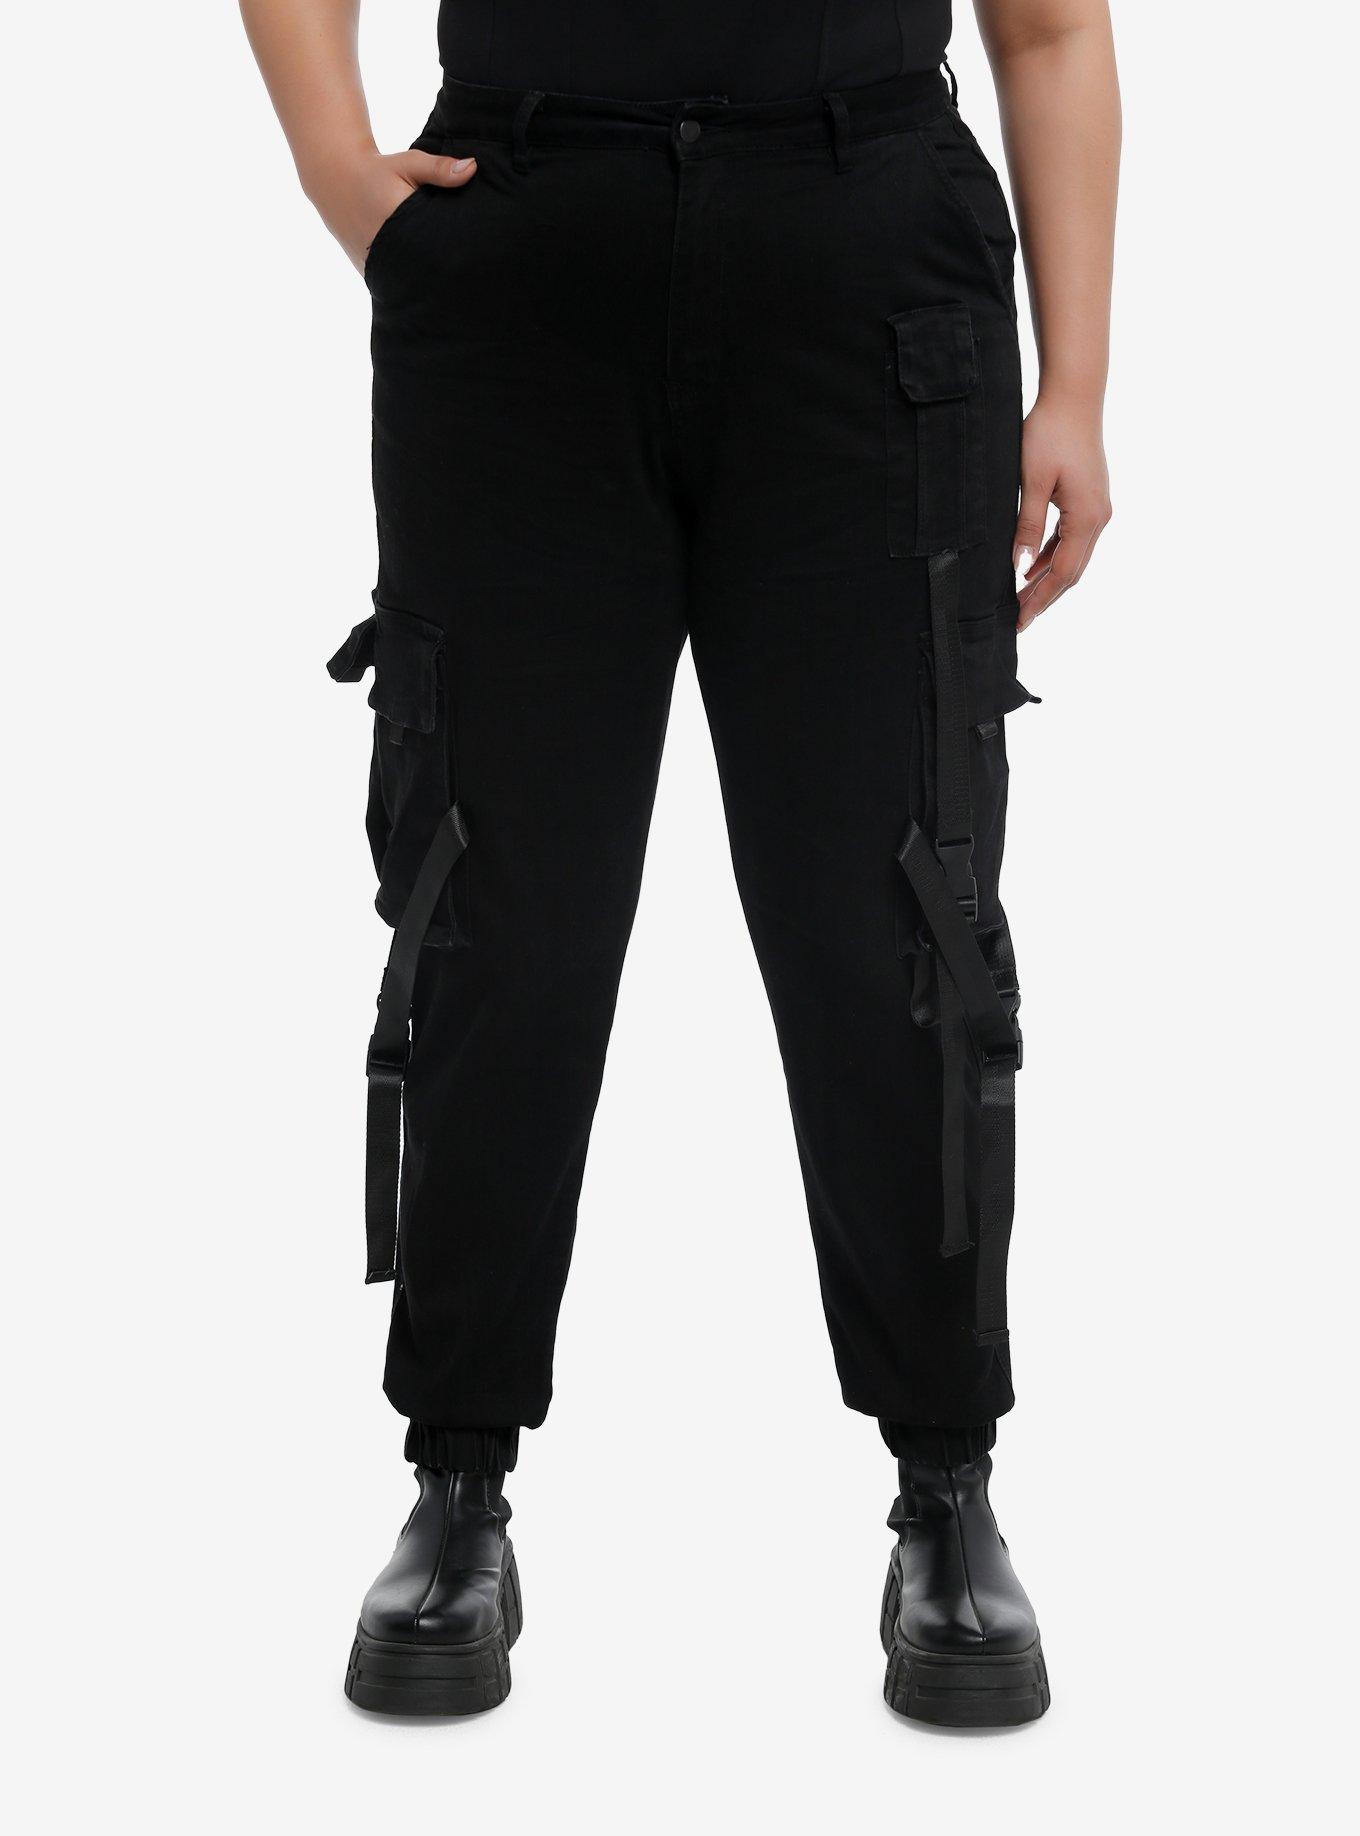 Black Denim Cargo Pockets & Straps Girls Jogger Pants Plus Size | Hot Topic